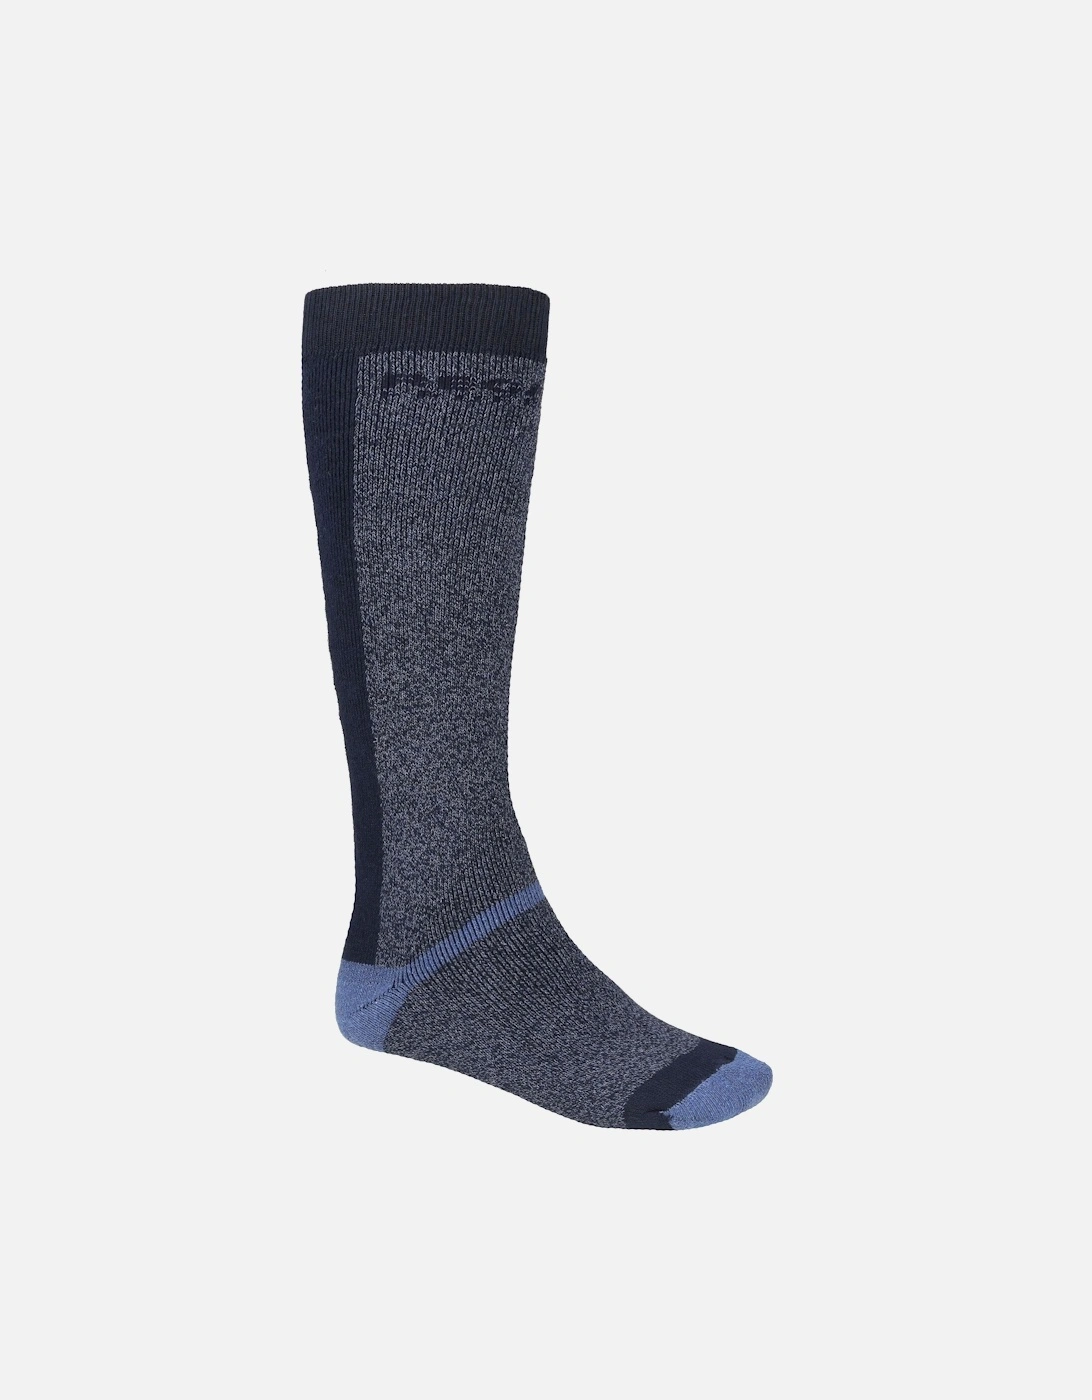 Mens Pro Assorted Designs Boot Socks Set (Pack of 2)